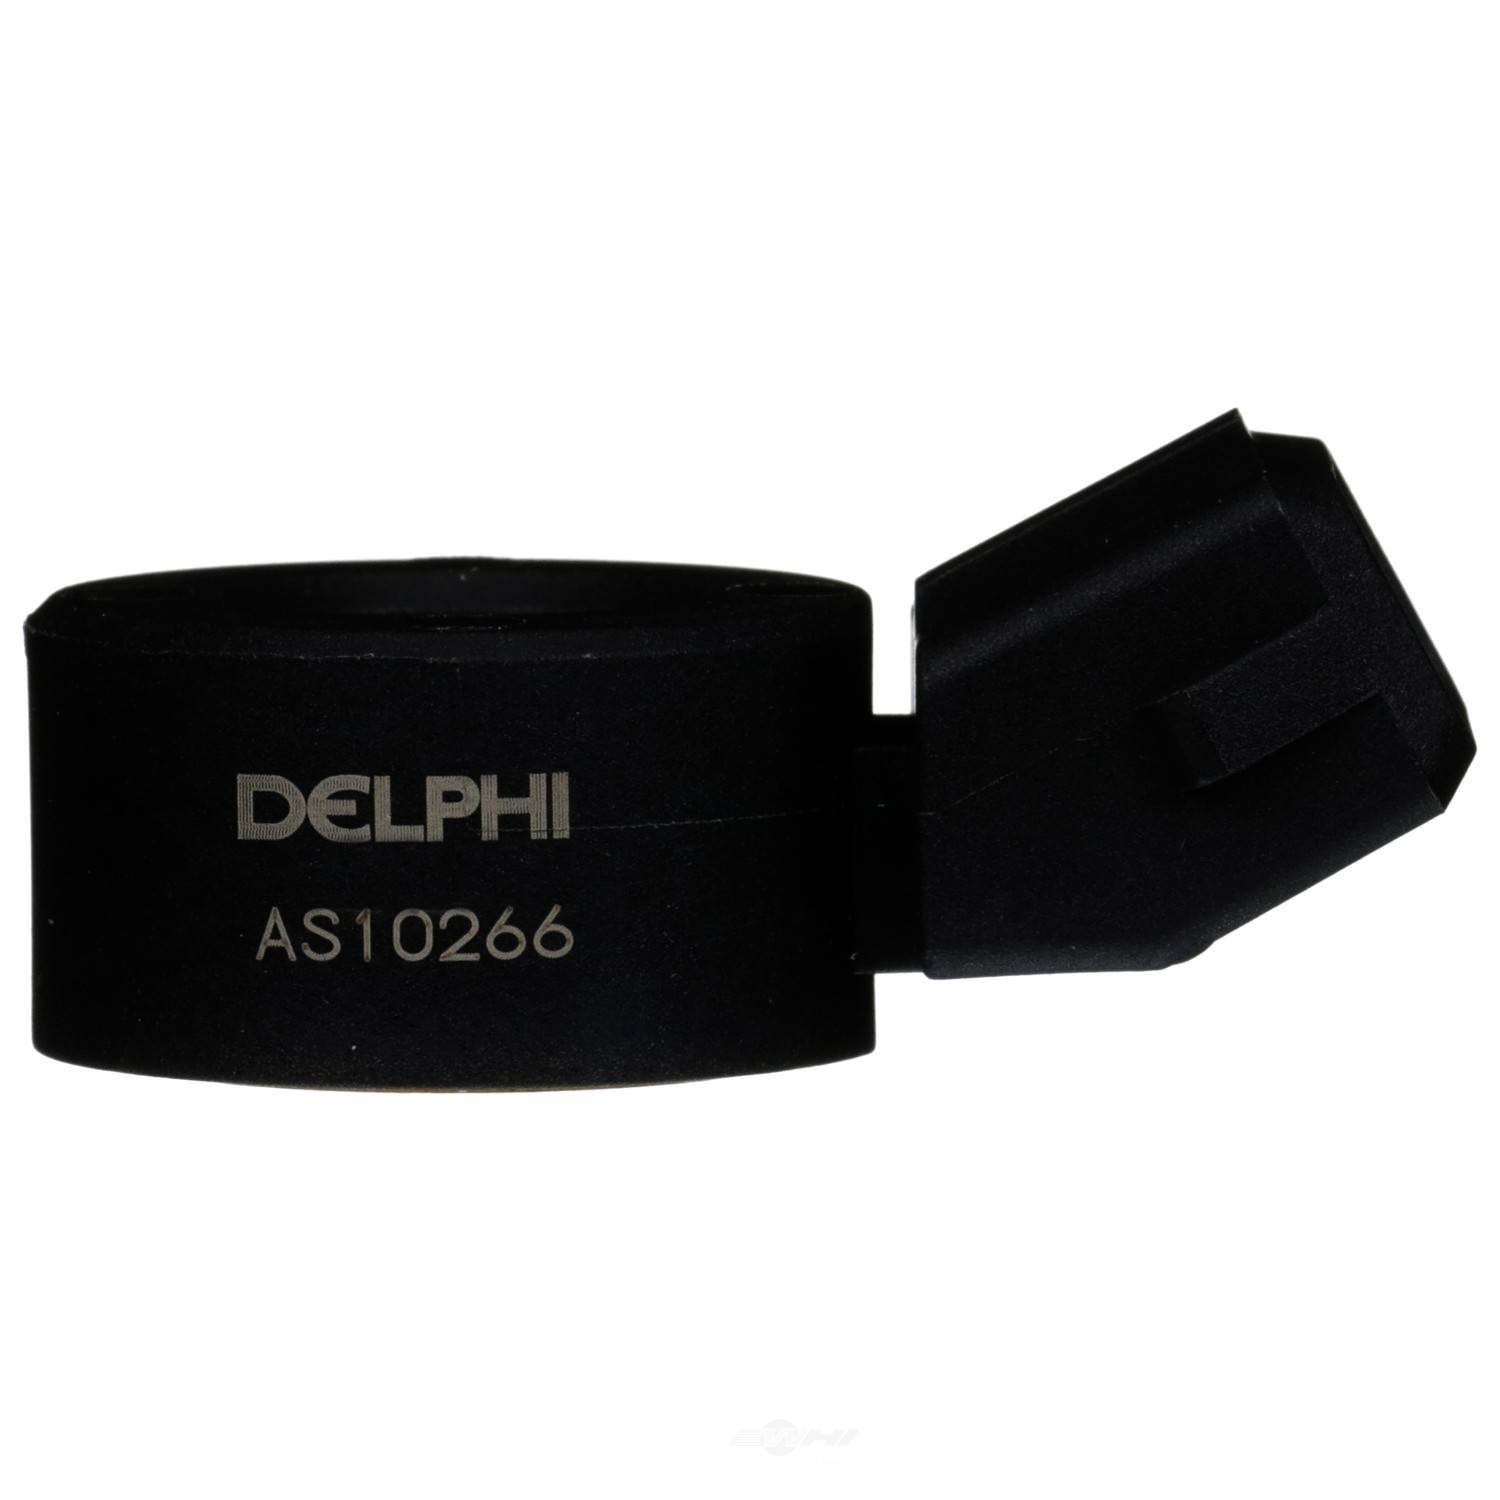 DELPHI - Ignition Knock(detonation) Sensor - DPH AS10266